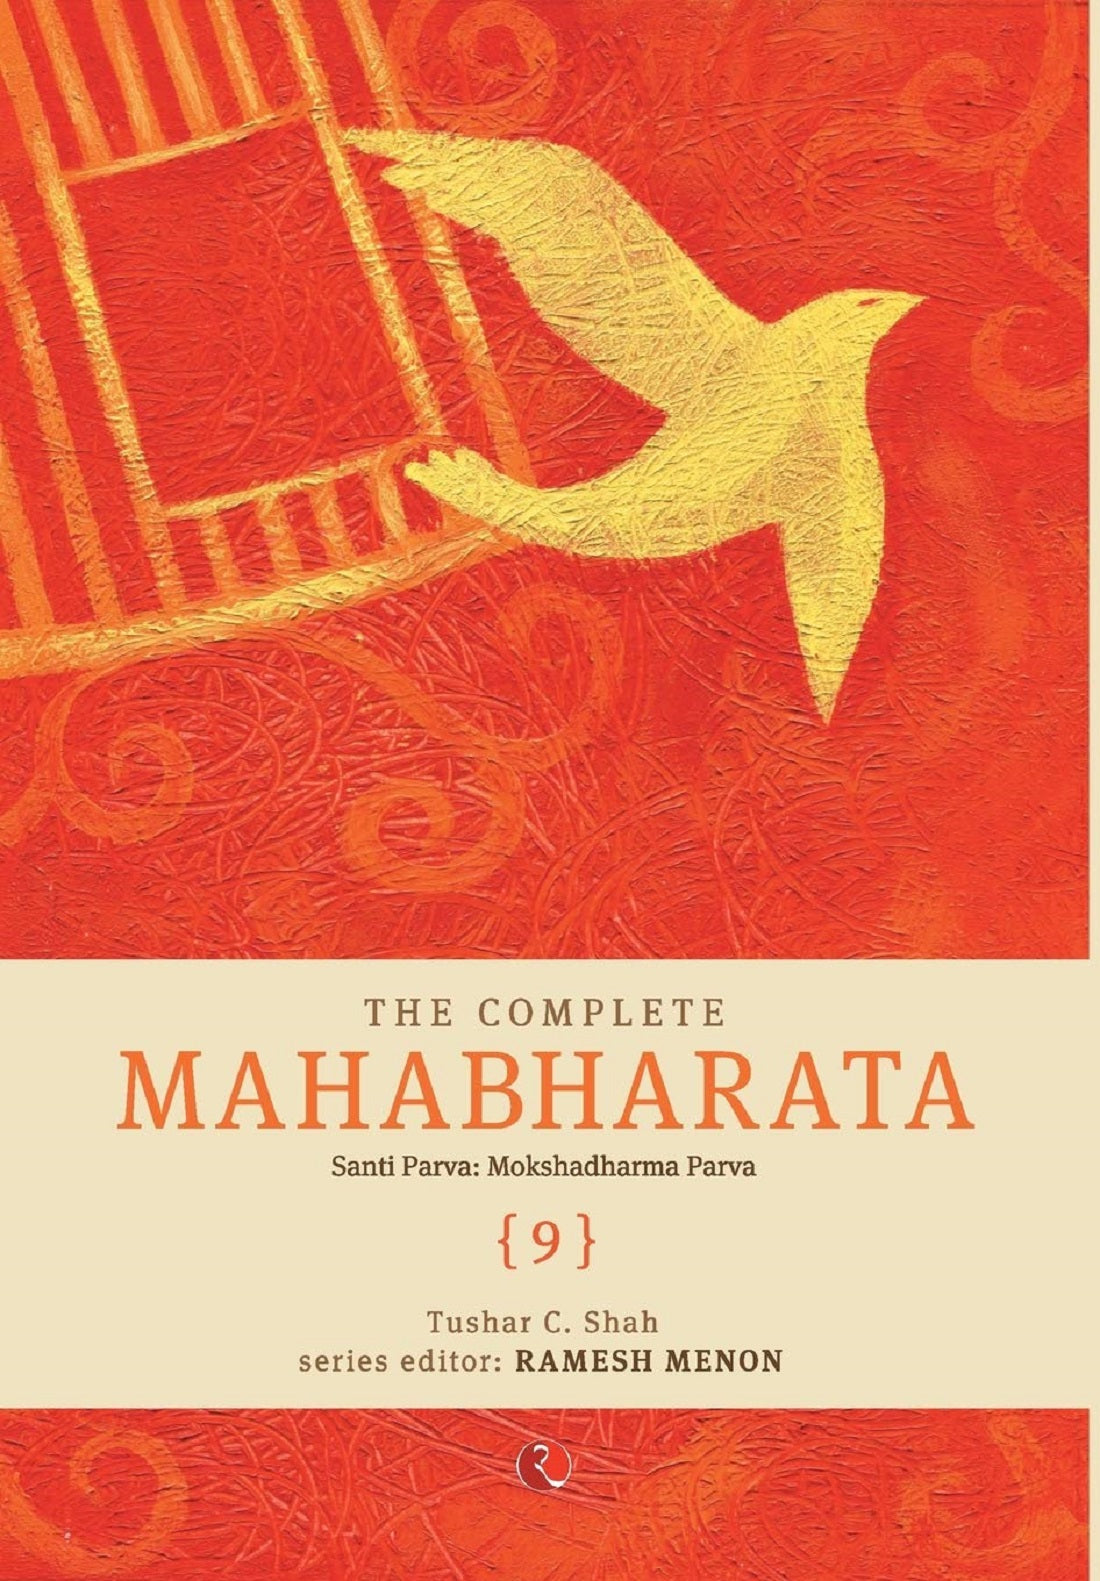 THE COMPLETE MAHABHARATA VOL 9